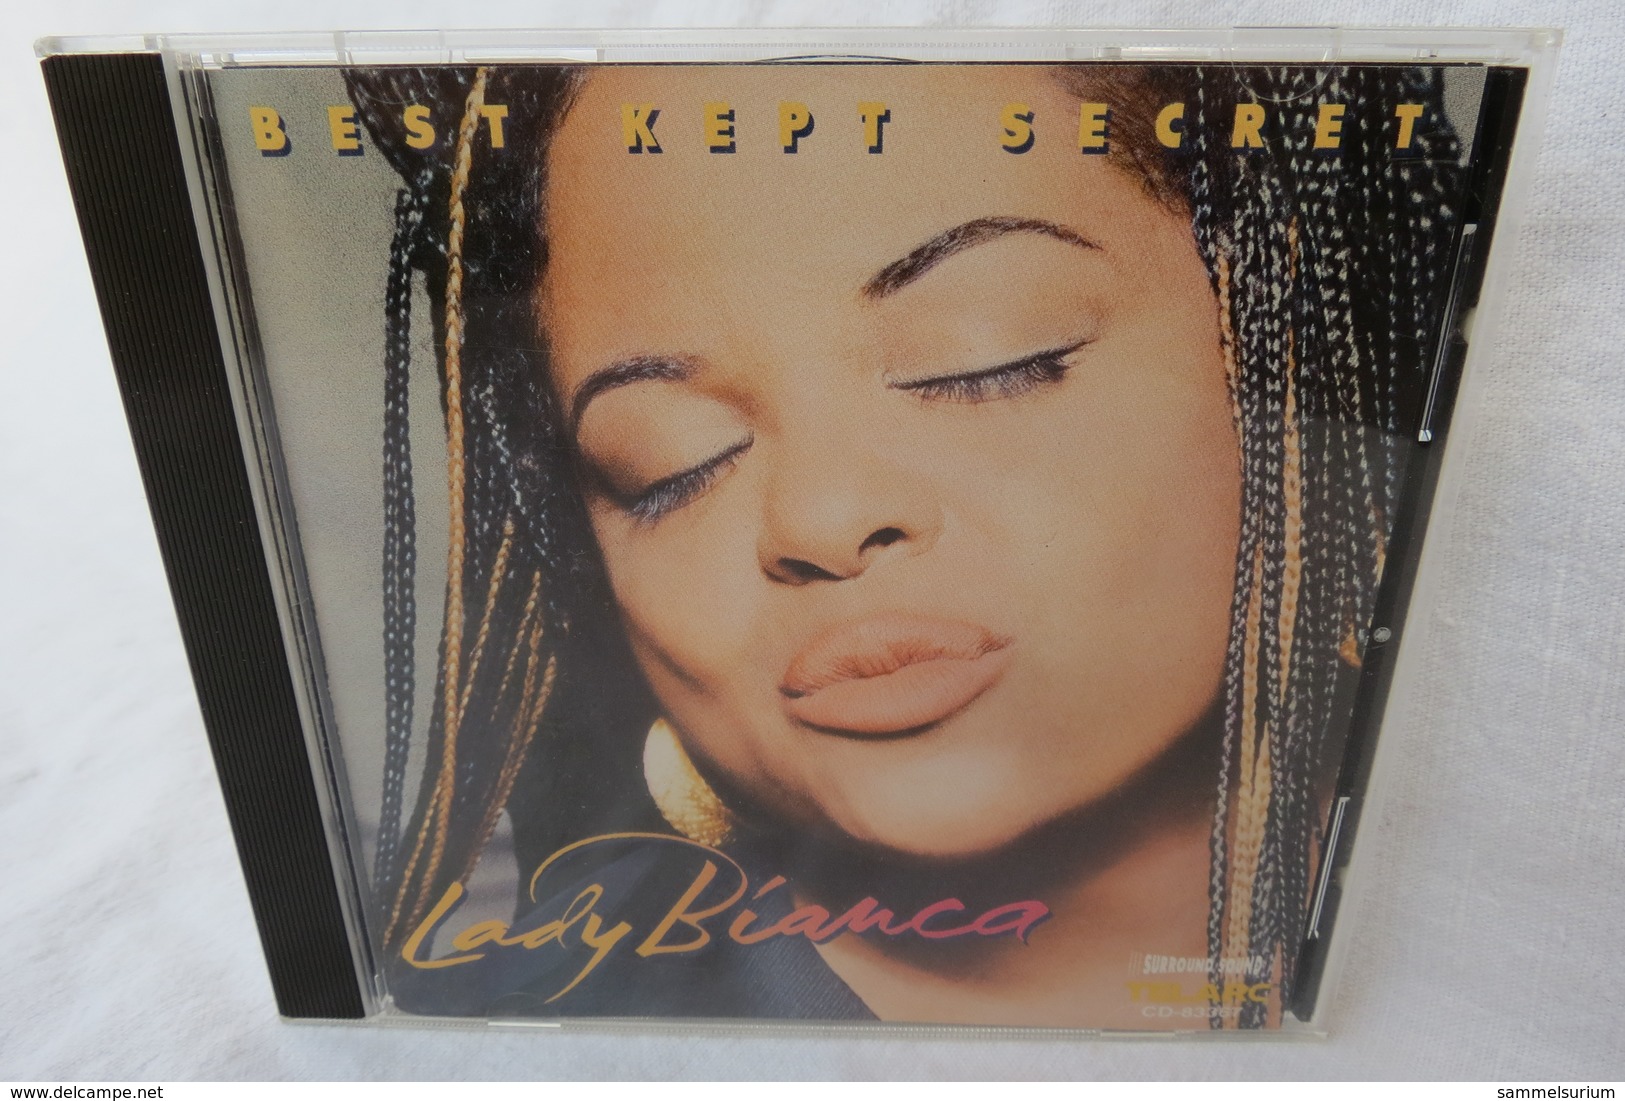 CD "Lady Bianca" Best Kept Secret - Sonstige - Englische Musik